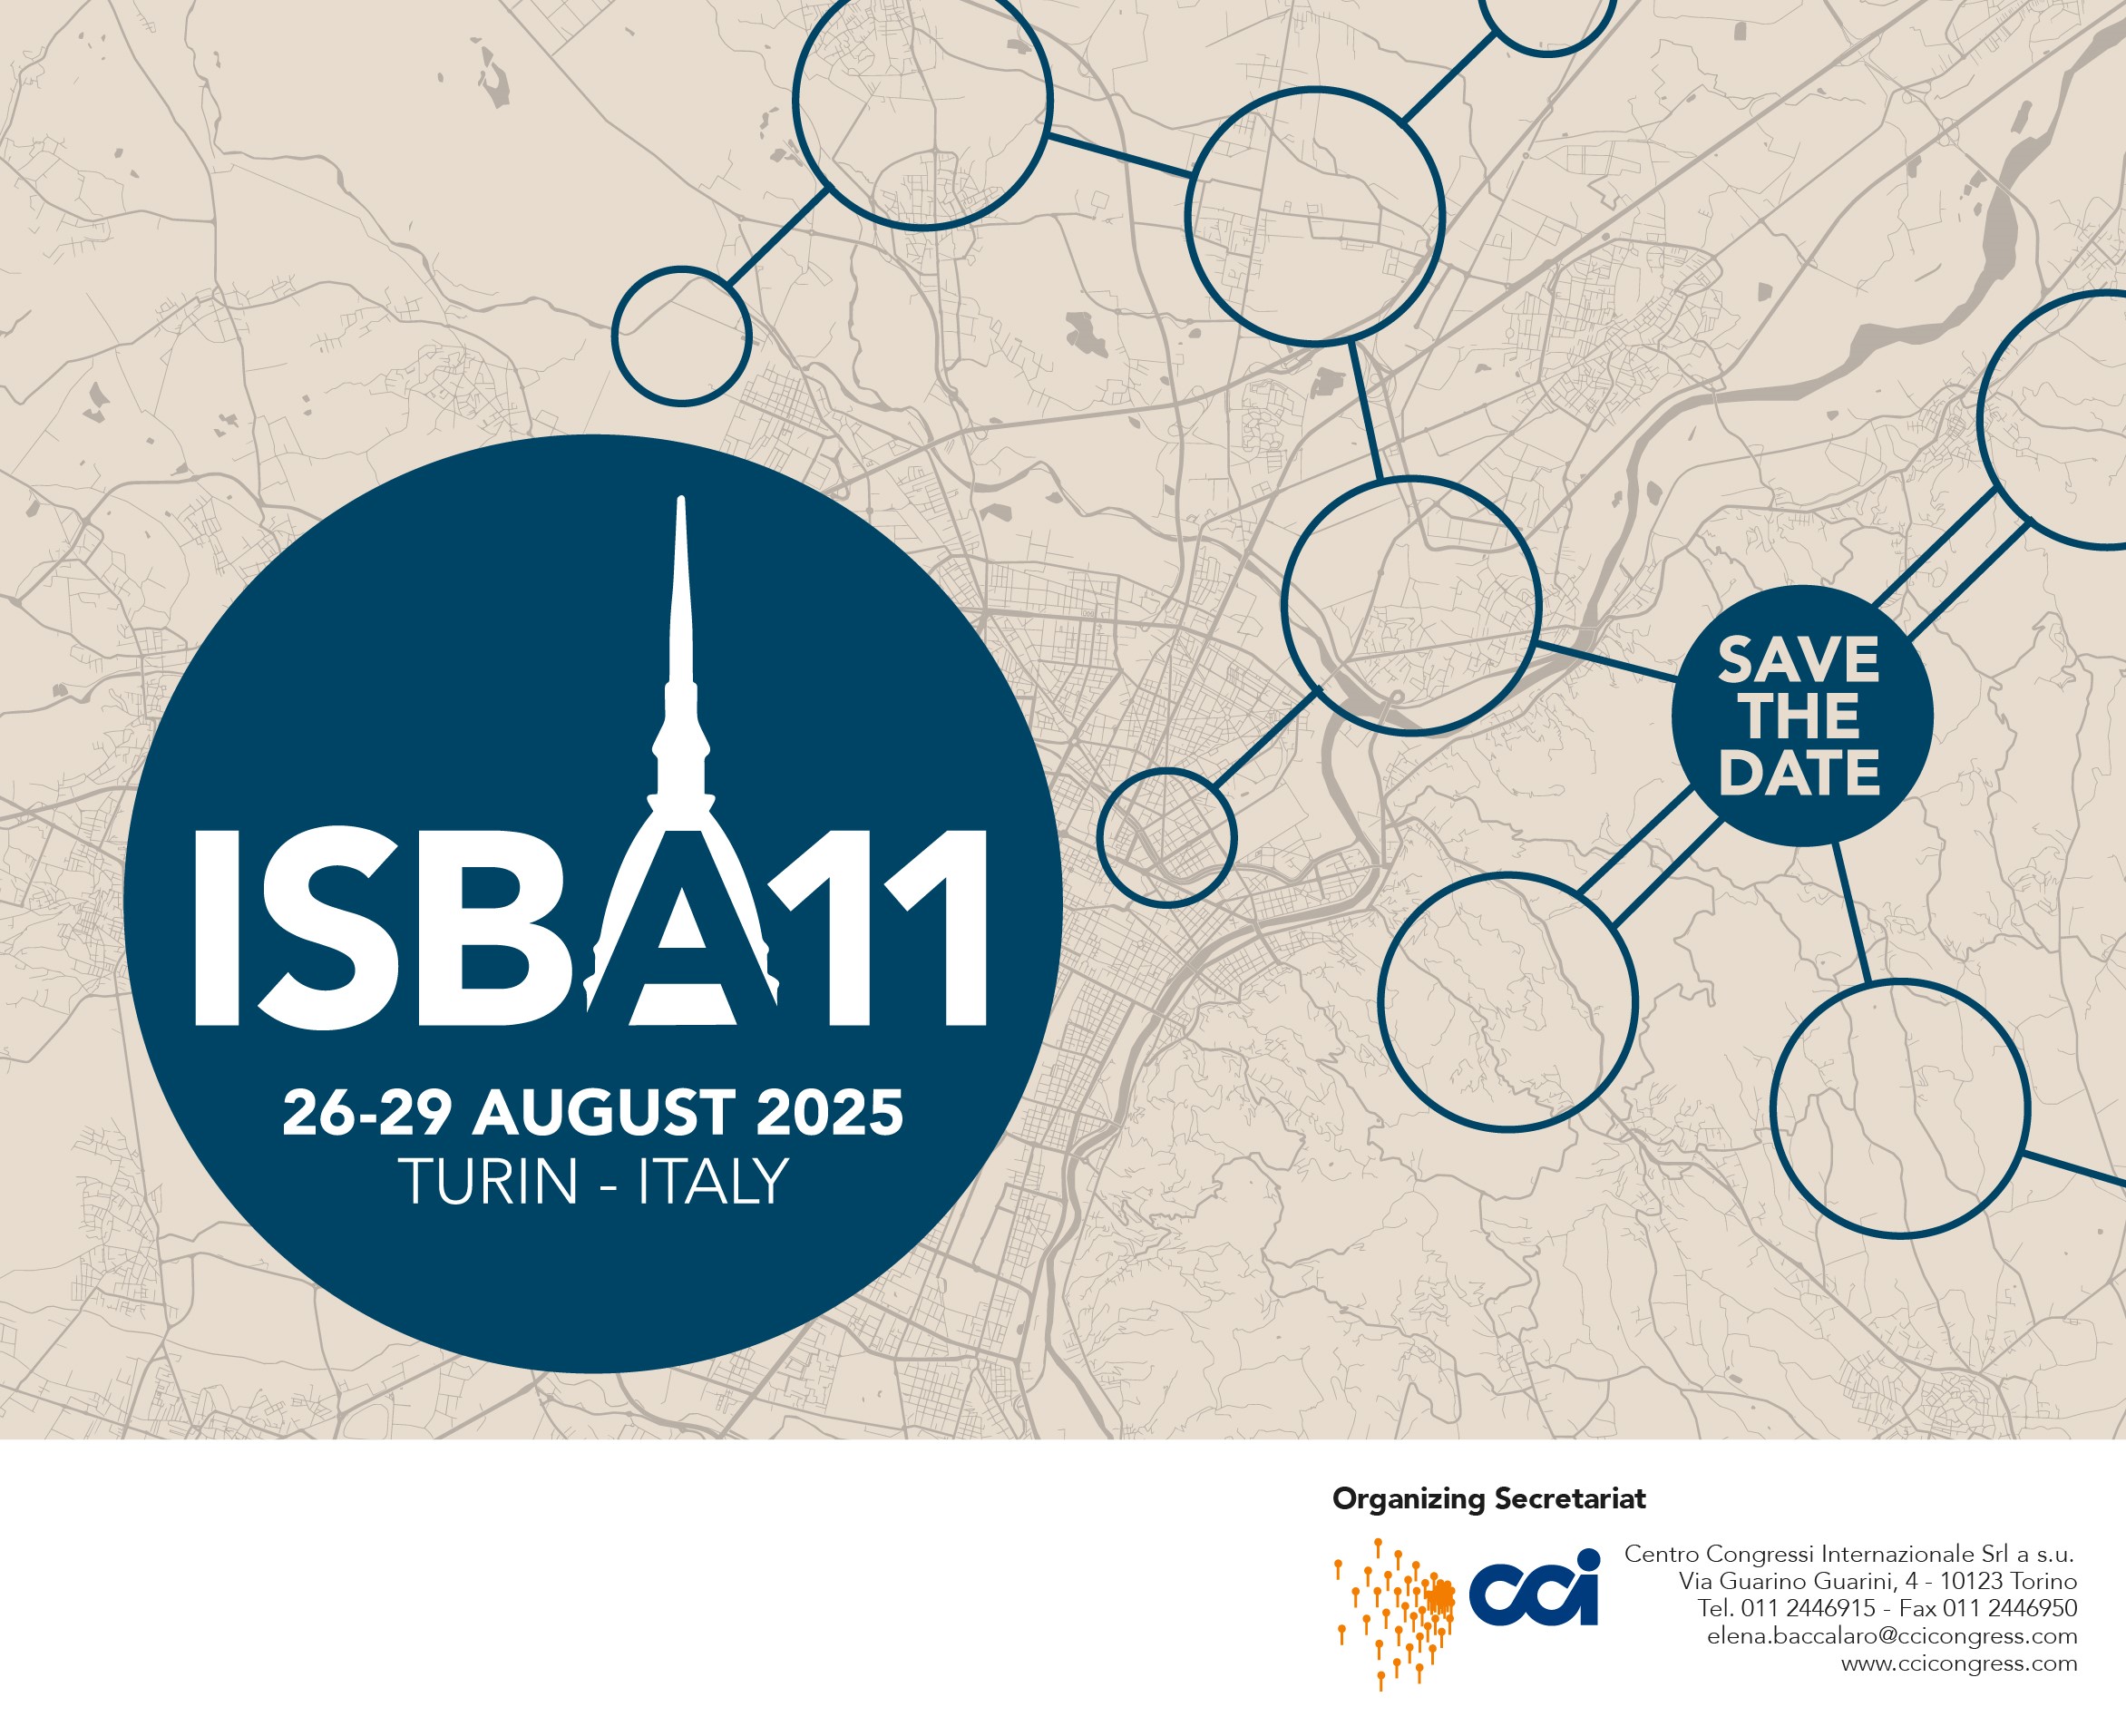 Save the Date: ISBA11 26-29 August 2025 Turin - Italy, Organising secretariat: Centro Congressi Internazionale Srl a s.u.